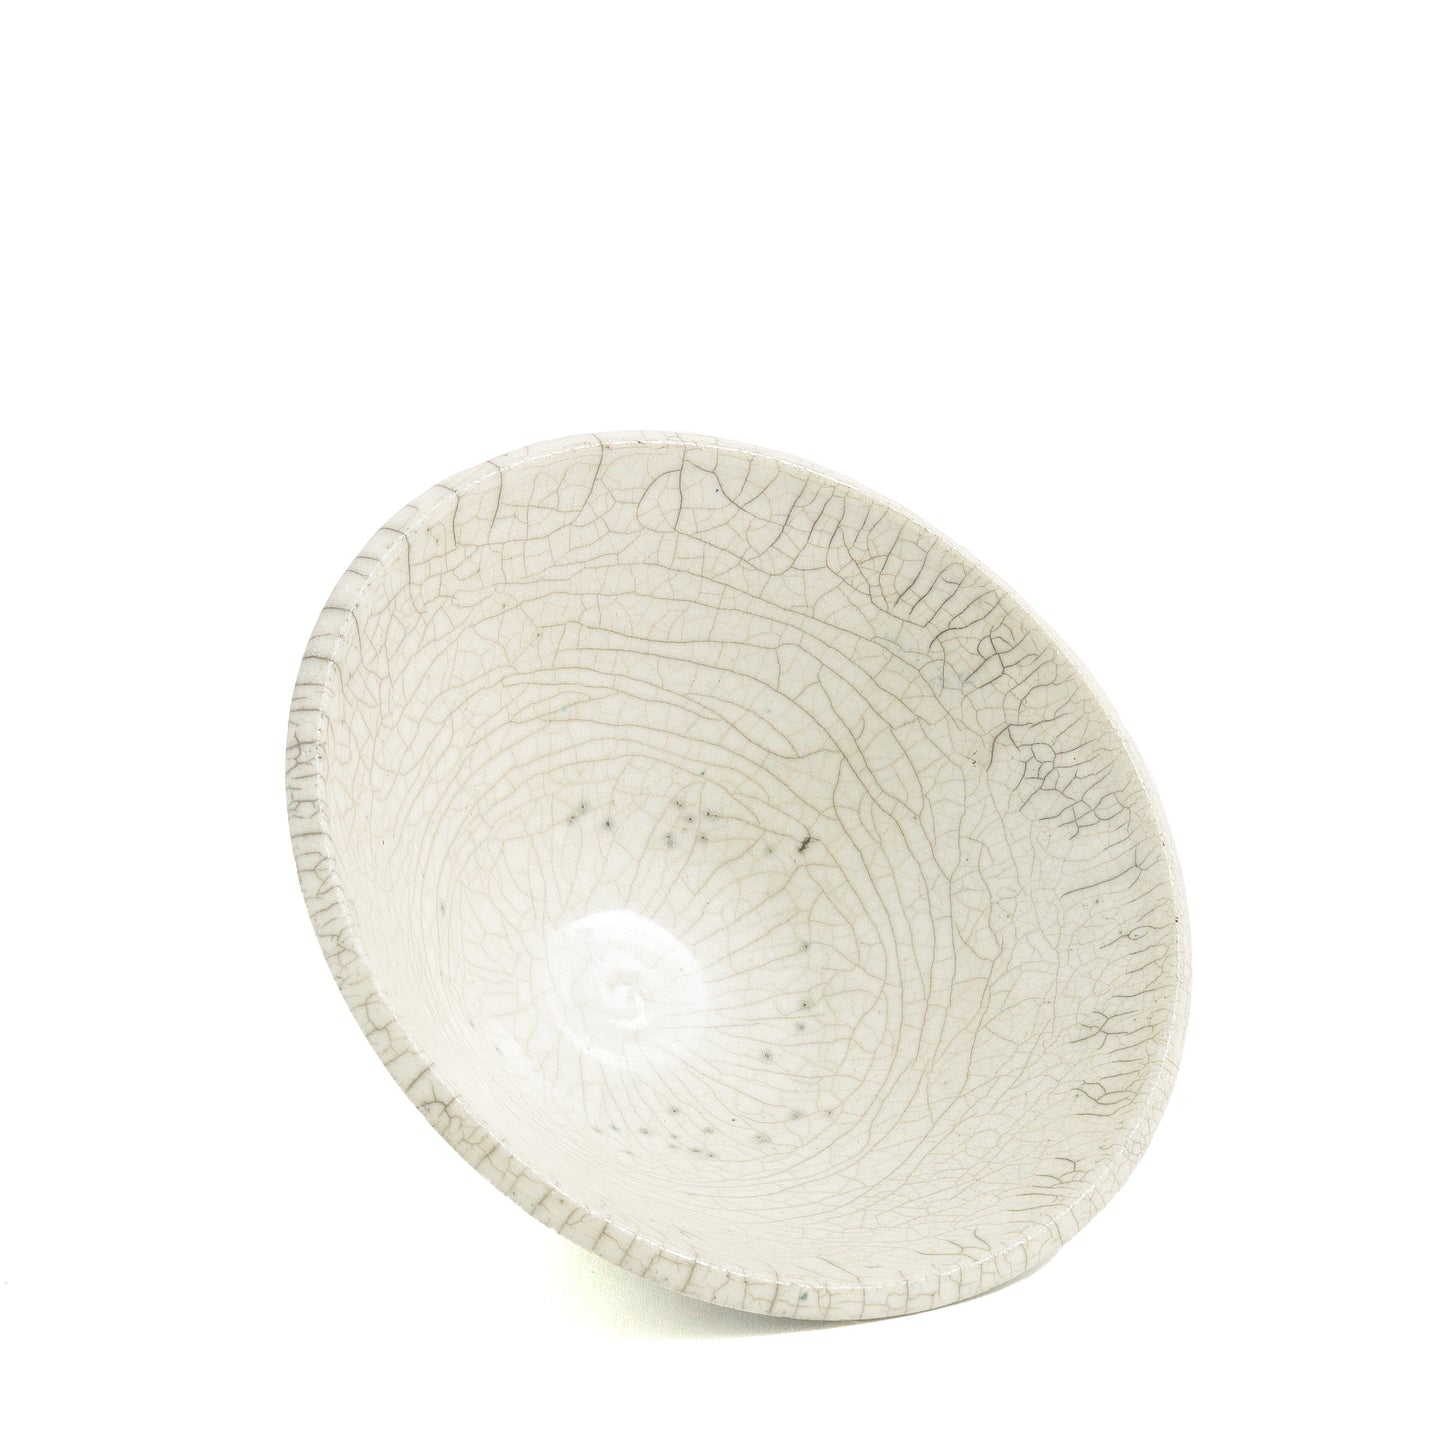 Japanese Minimalistic Moon Set of 4 Bowls Raku Ceramics Crackle White